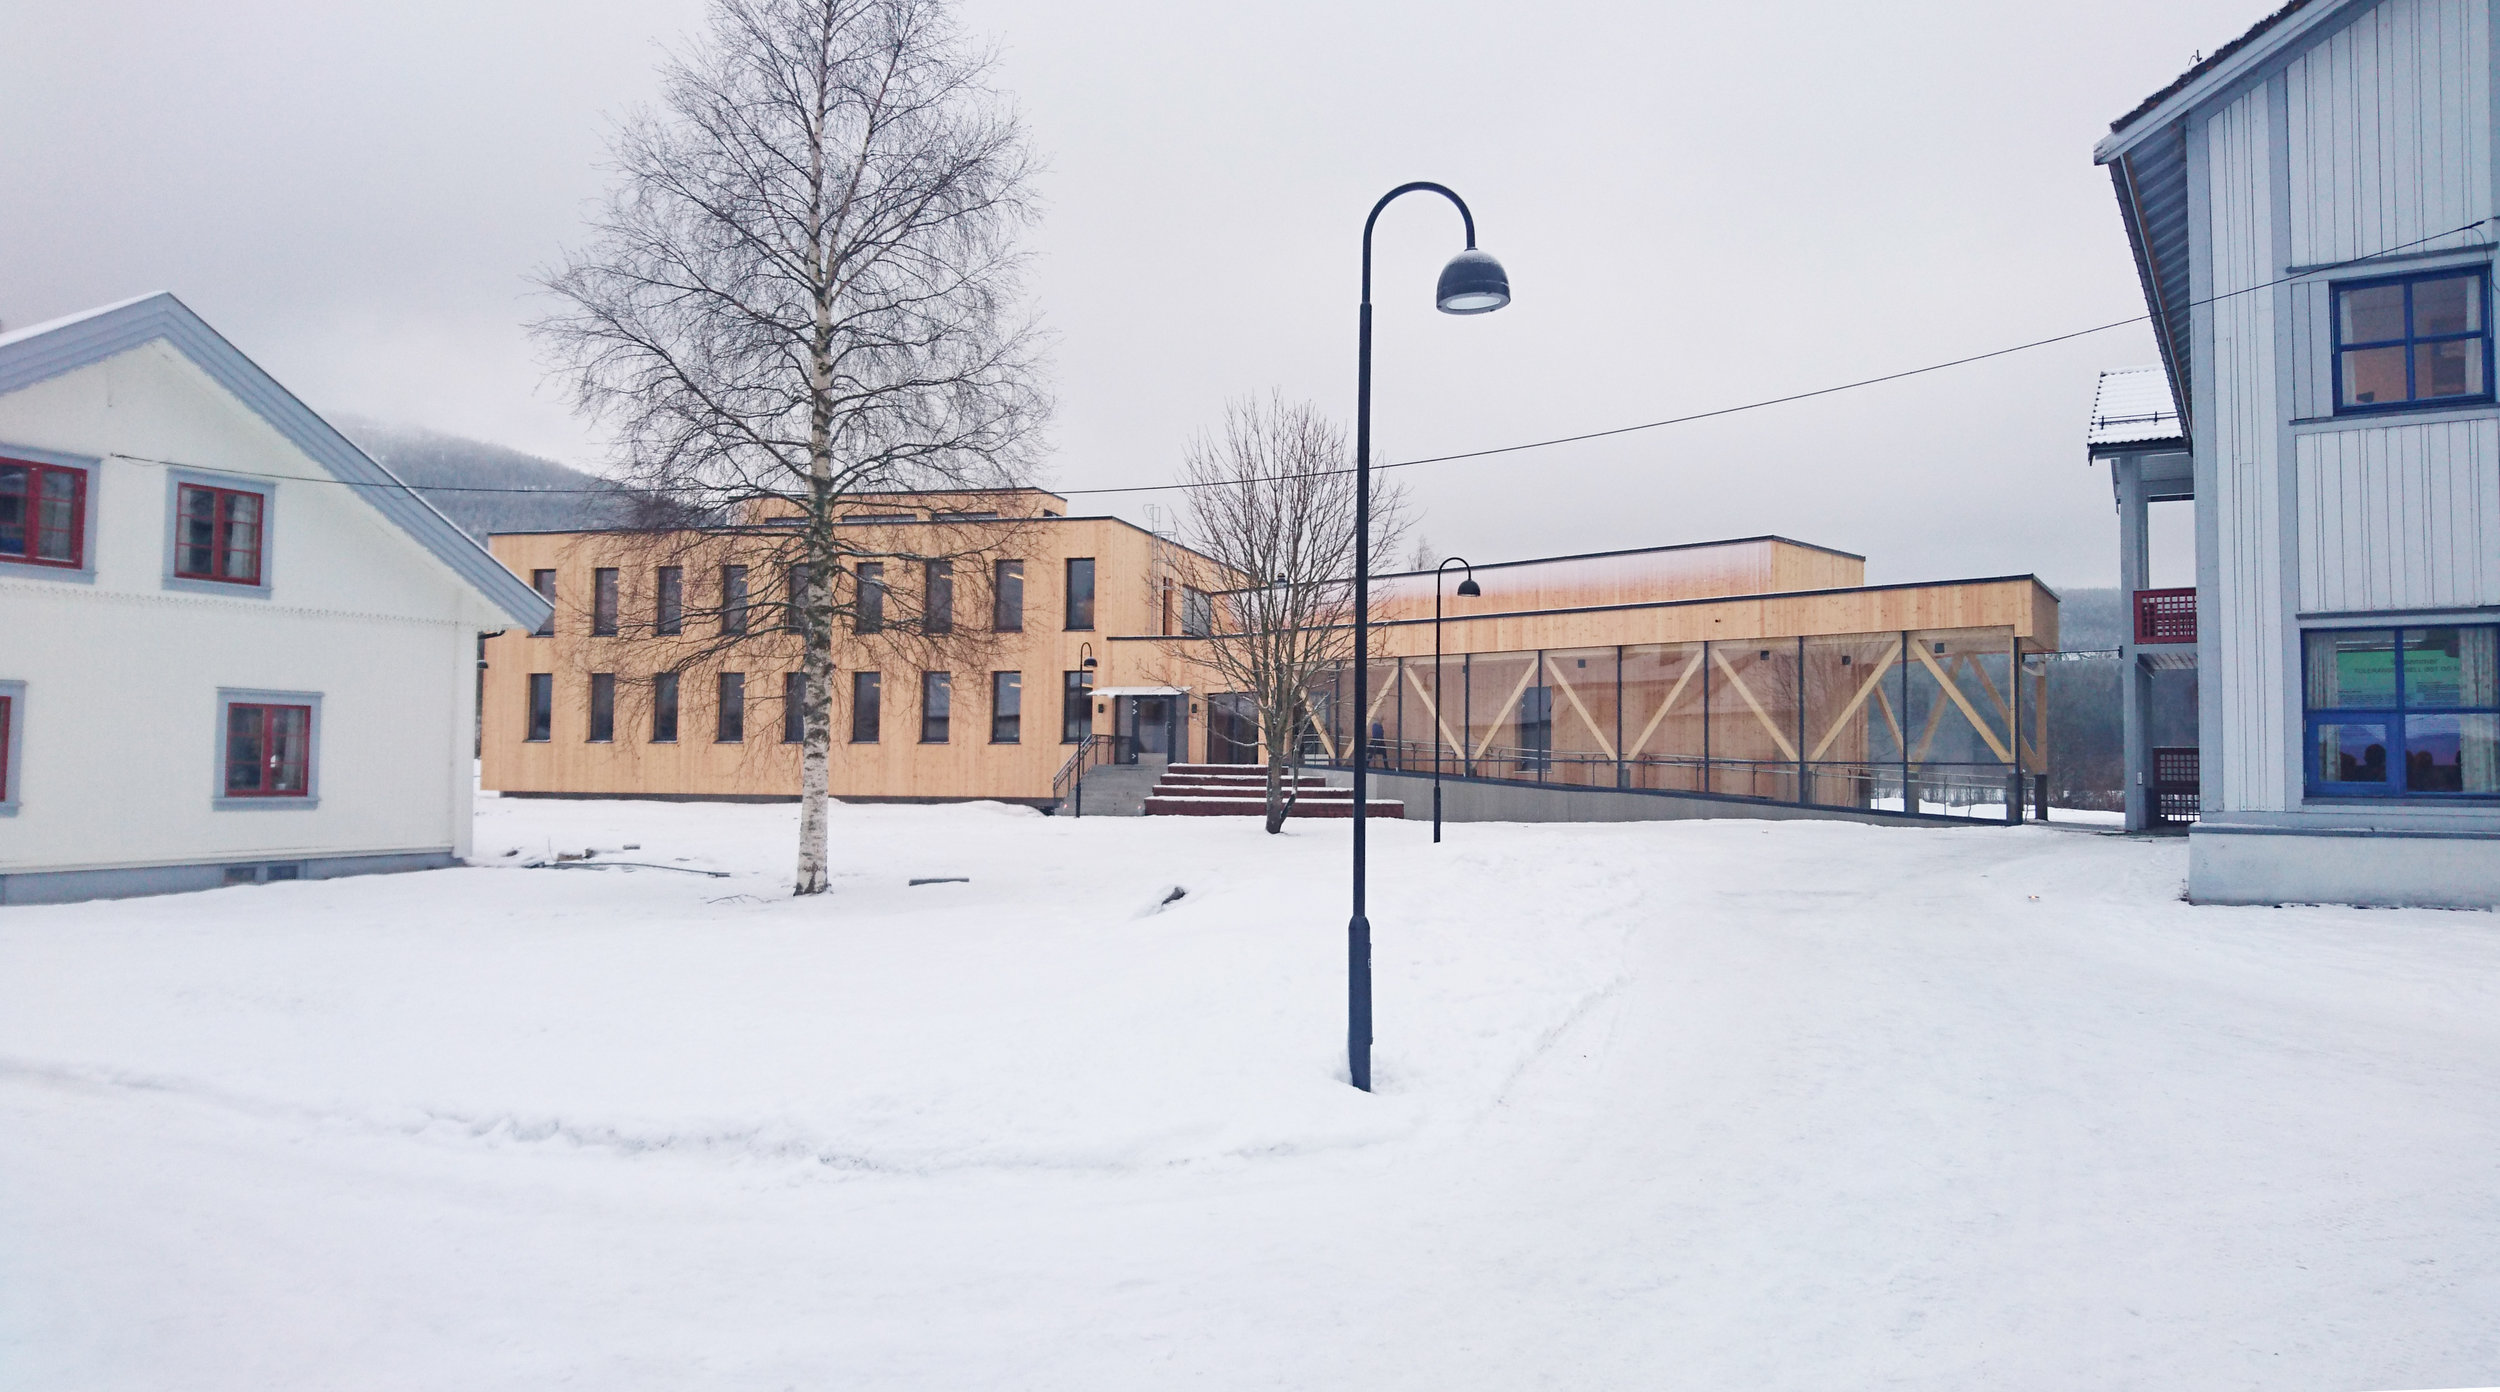 Evenstad Skole